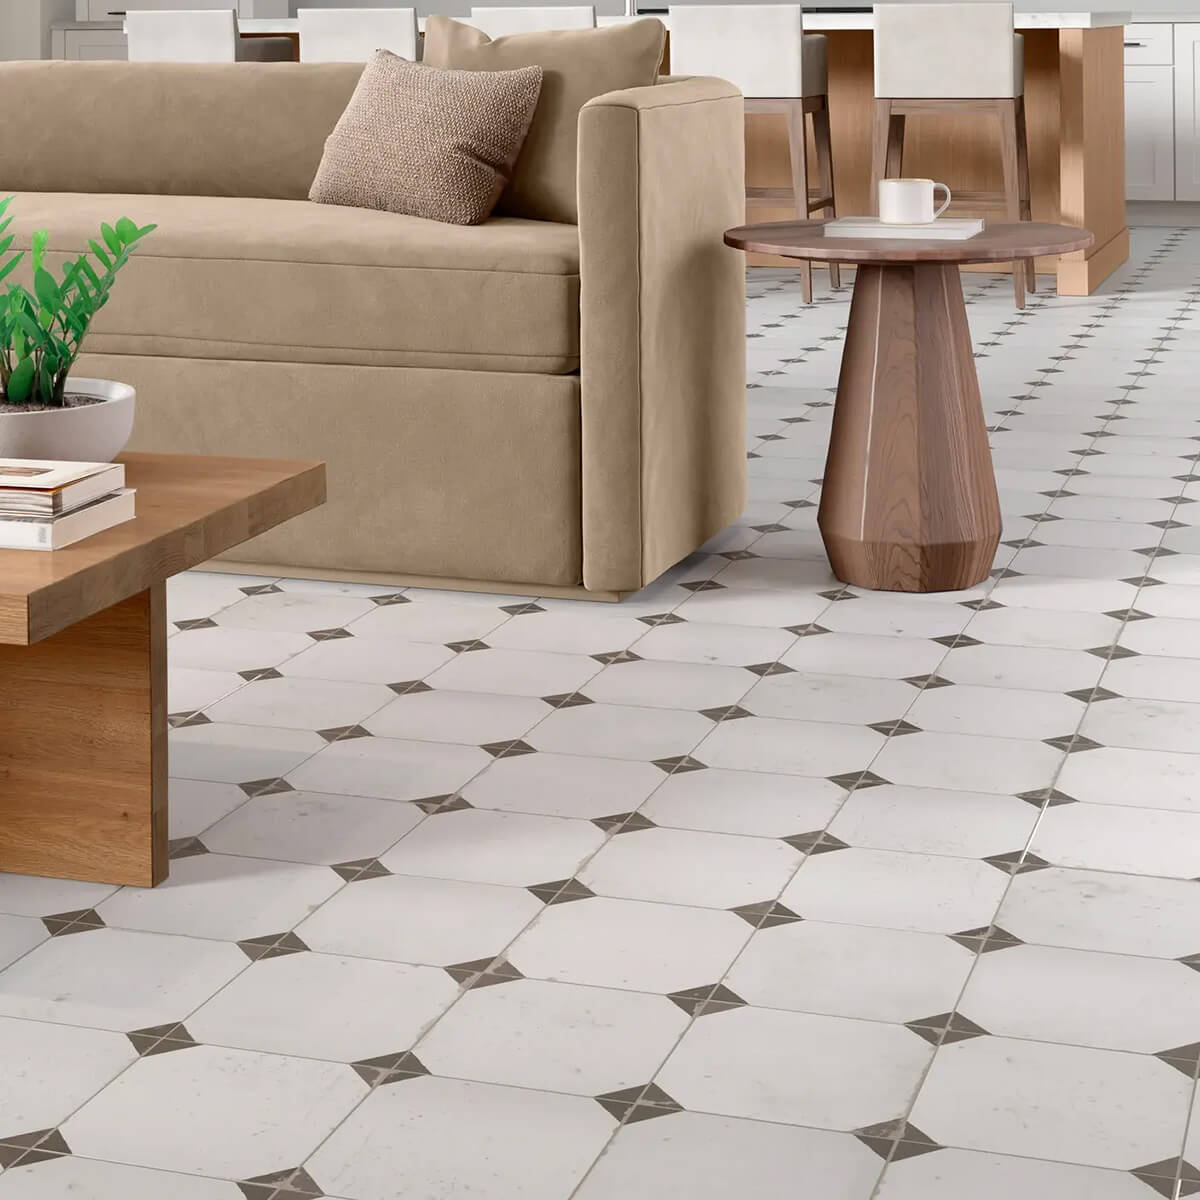 Tile flooring for living area | CarpetsPlus COLORTILE of Hutchinson